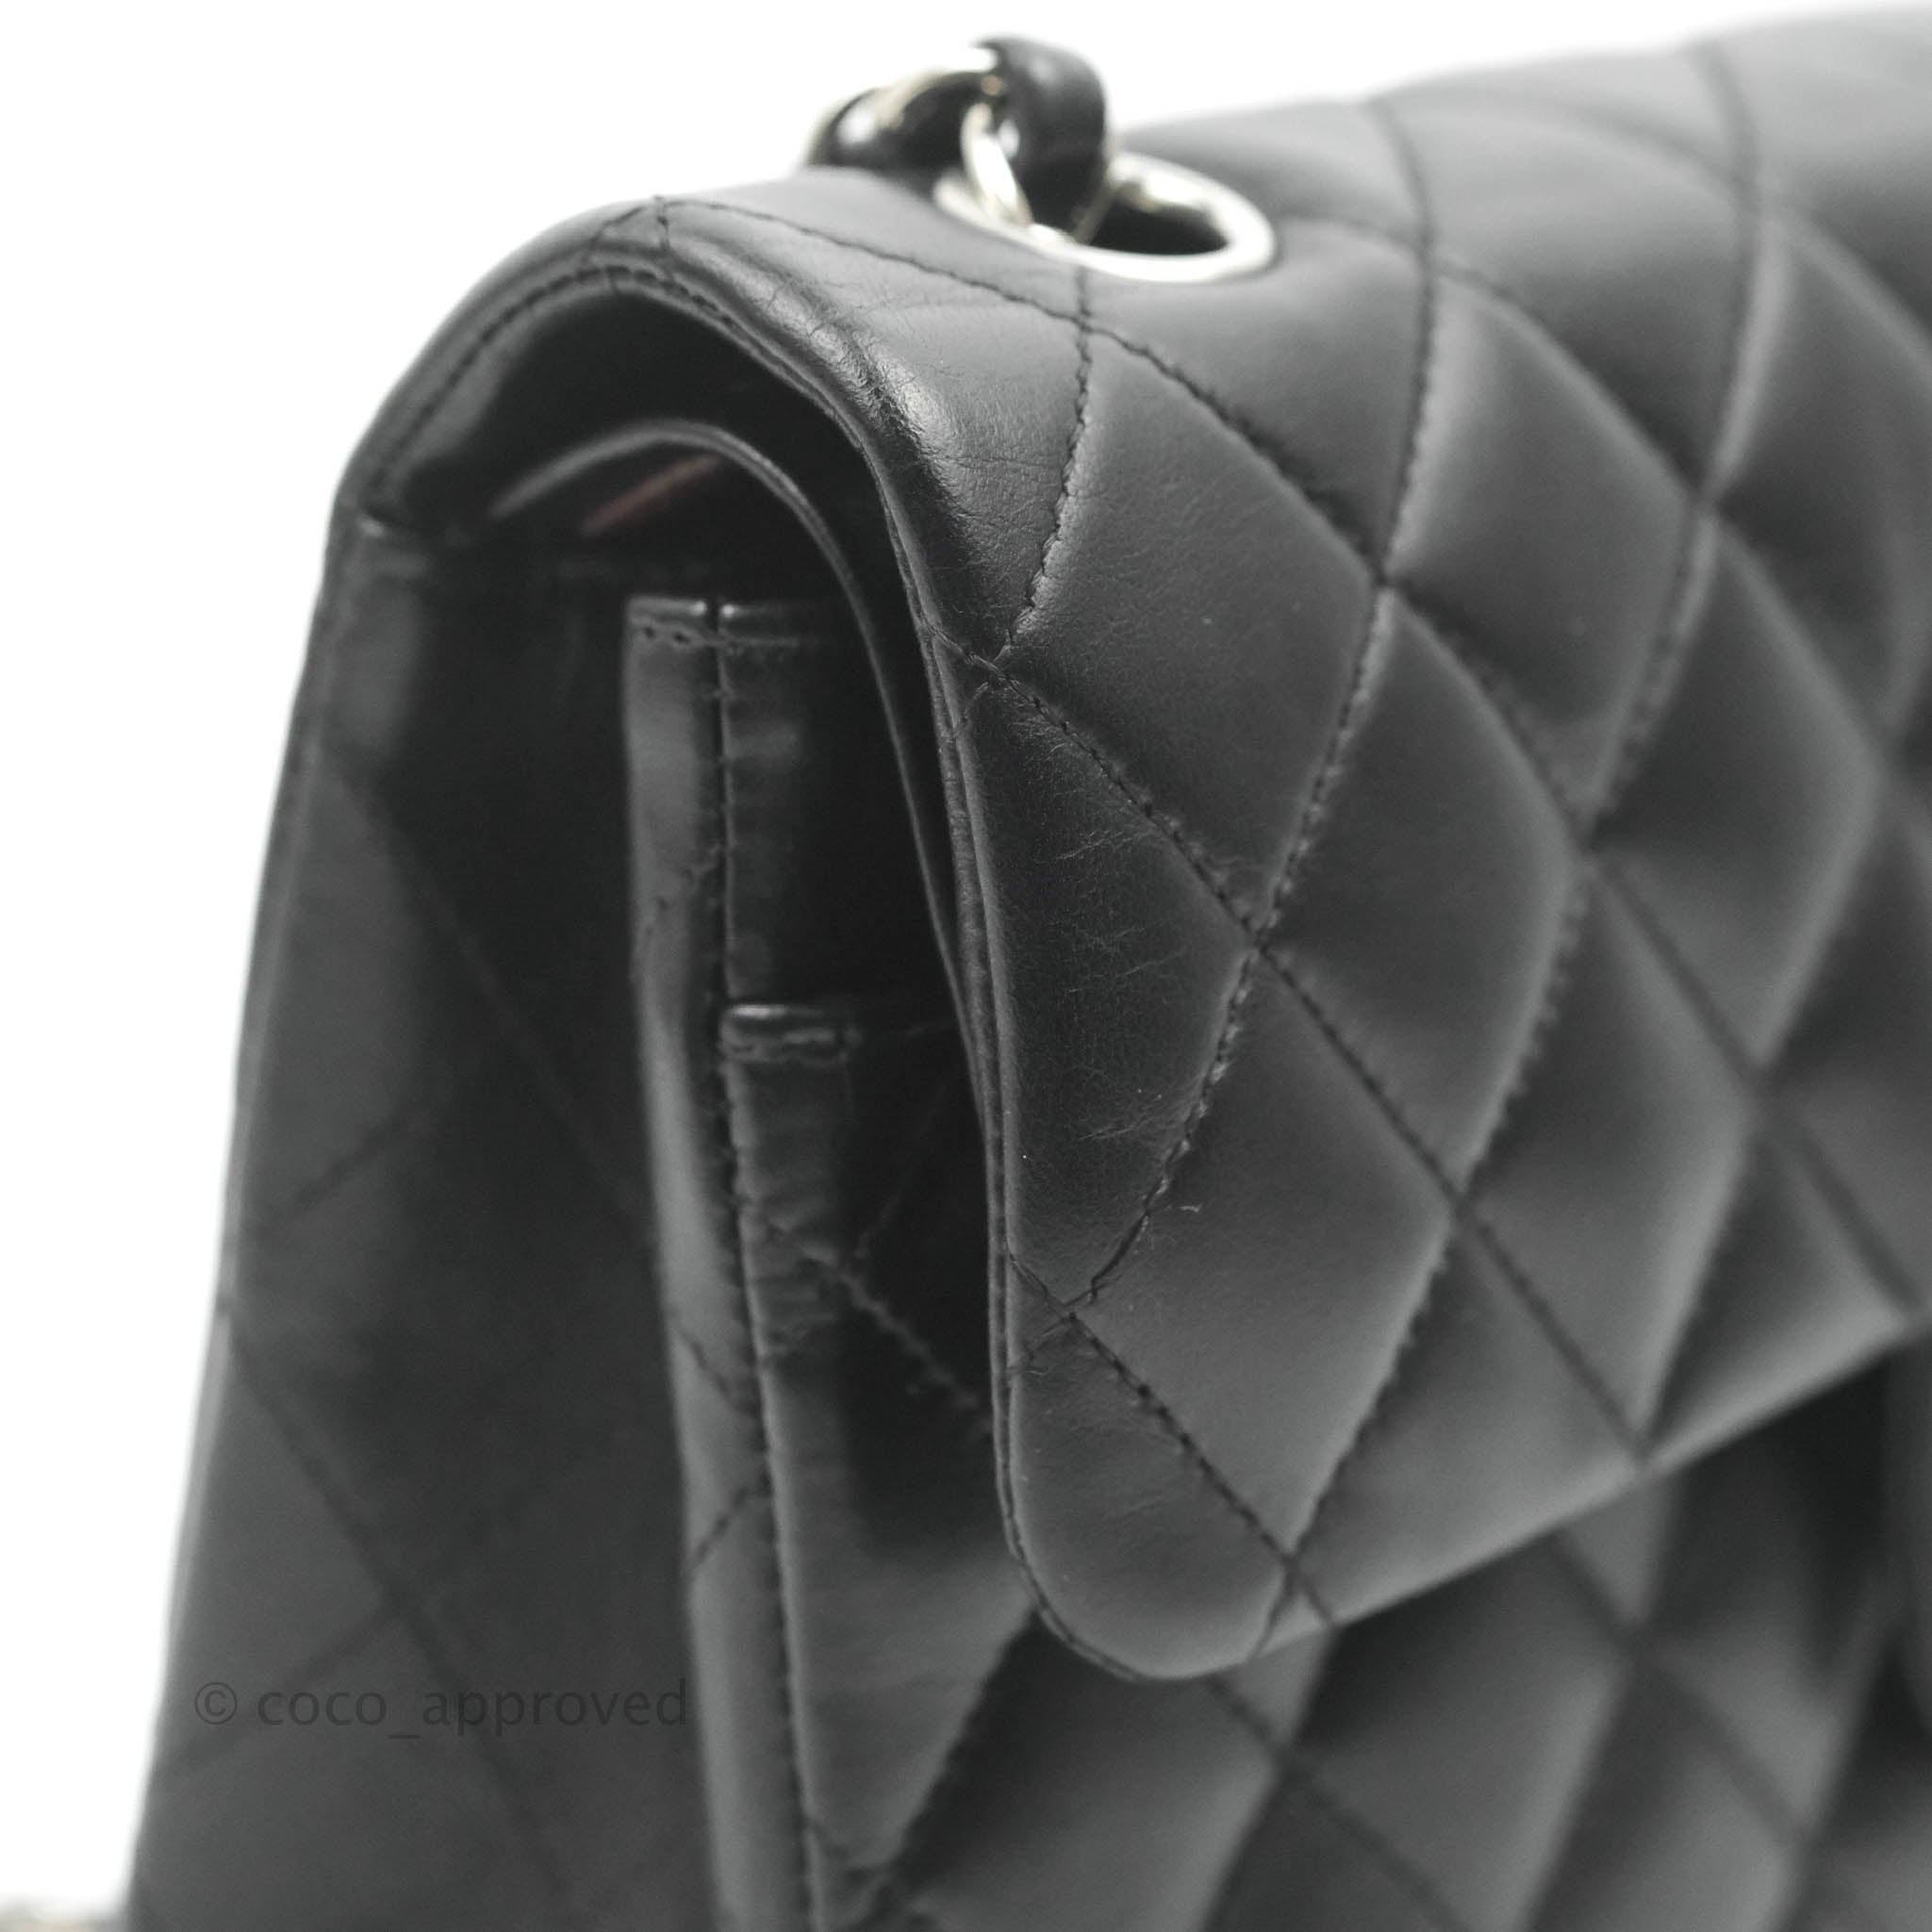 Mini flap bag, Lambskin & gold-tone metal, black — Fashion